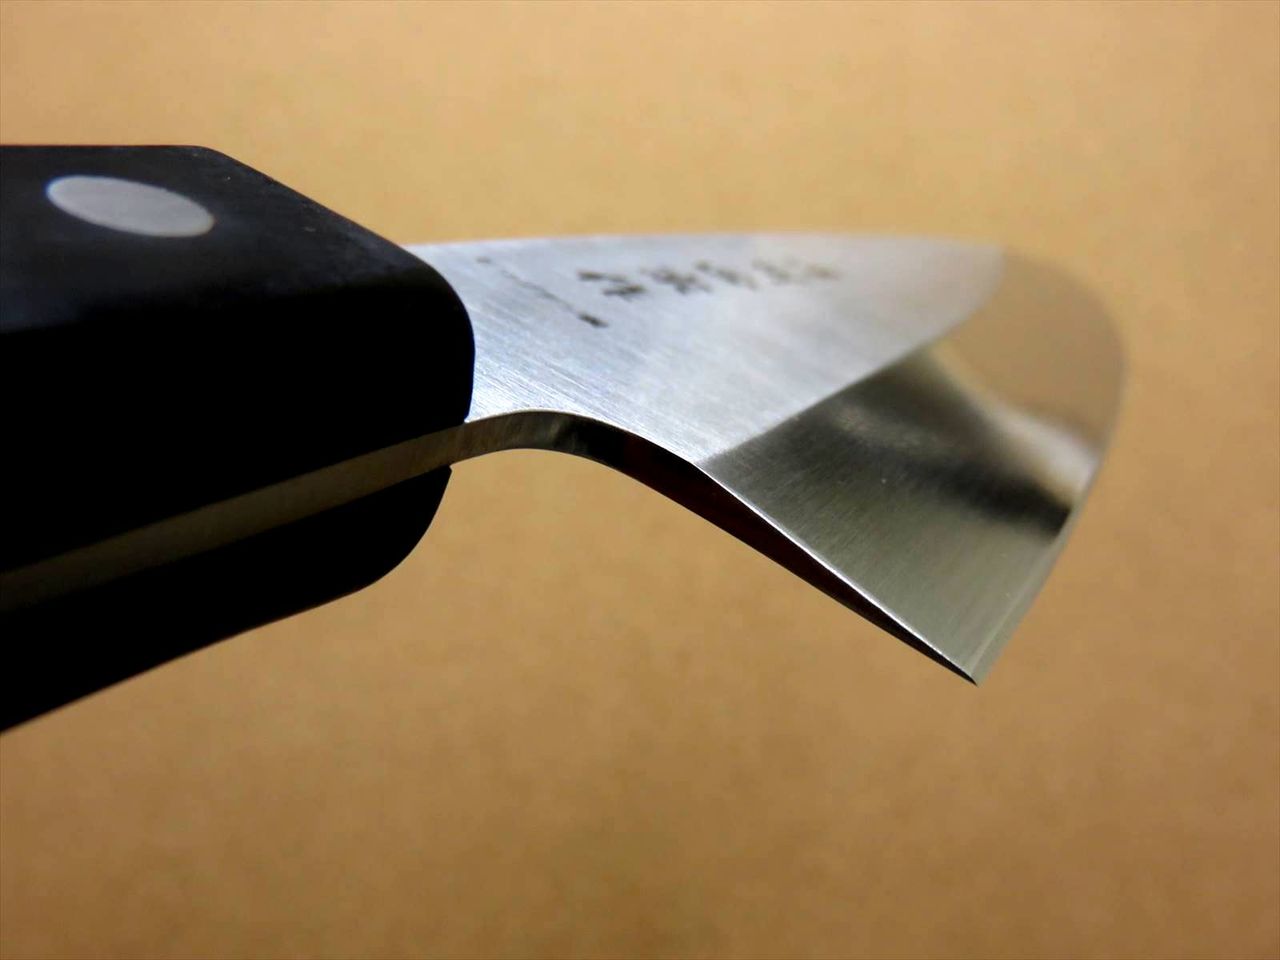 Japanese Masamune Kitchen Deba Knife 160mm 6.3" Phenol resin Handle SEKI JAPAN